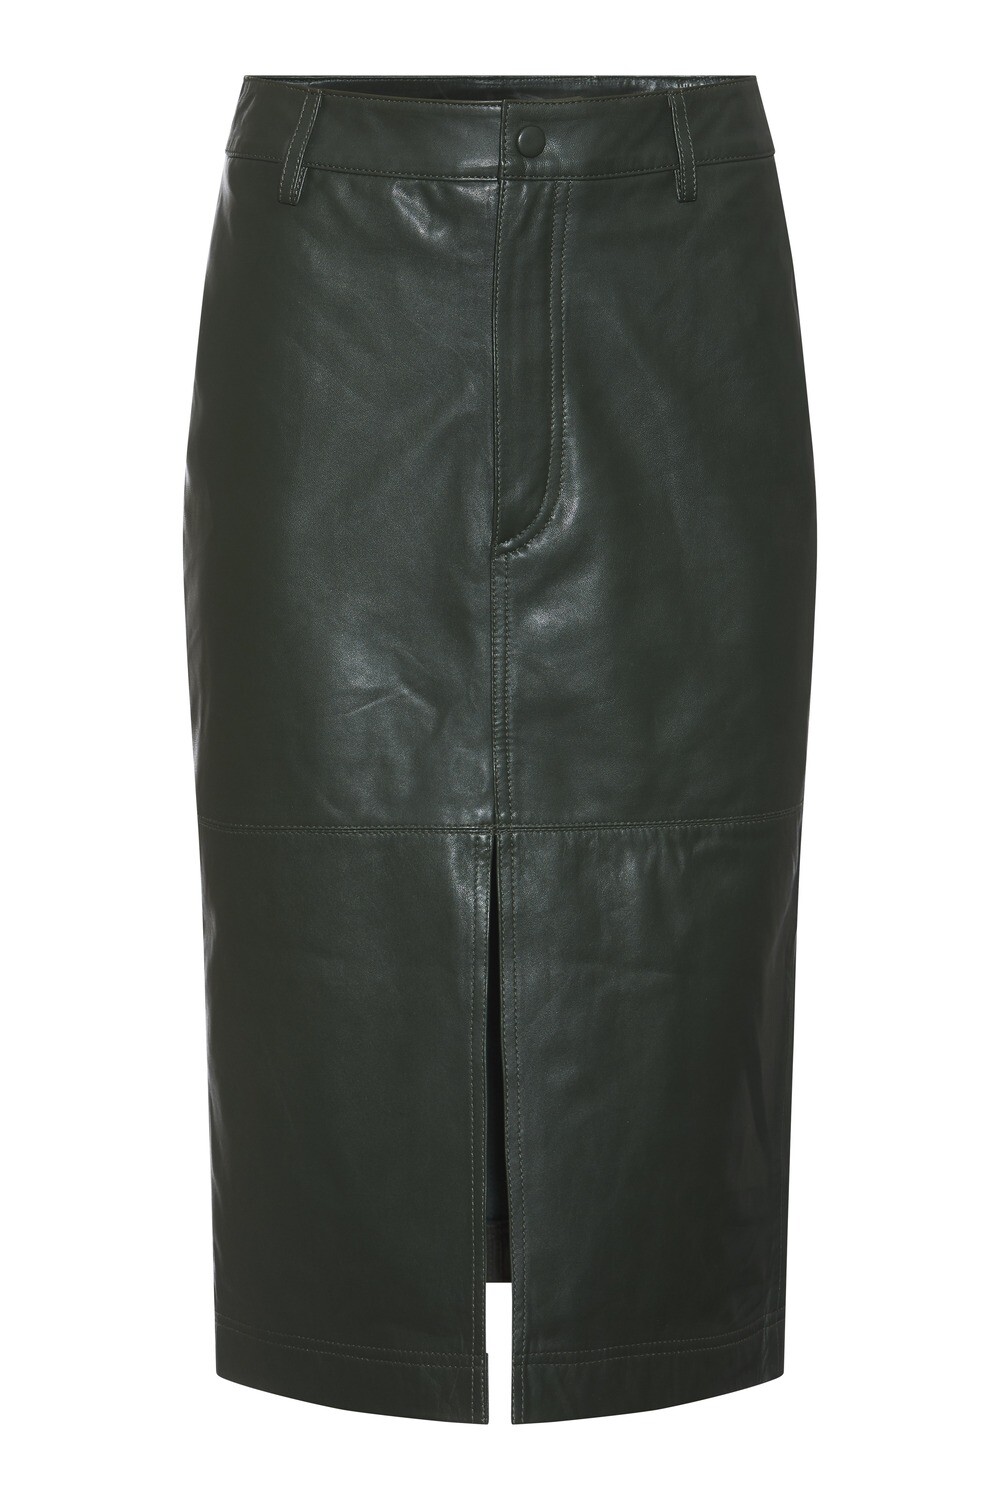 Nuk leather skirt Rue de femme